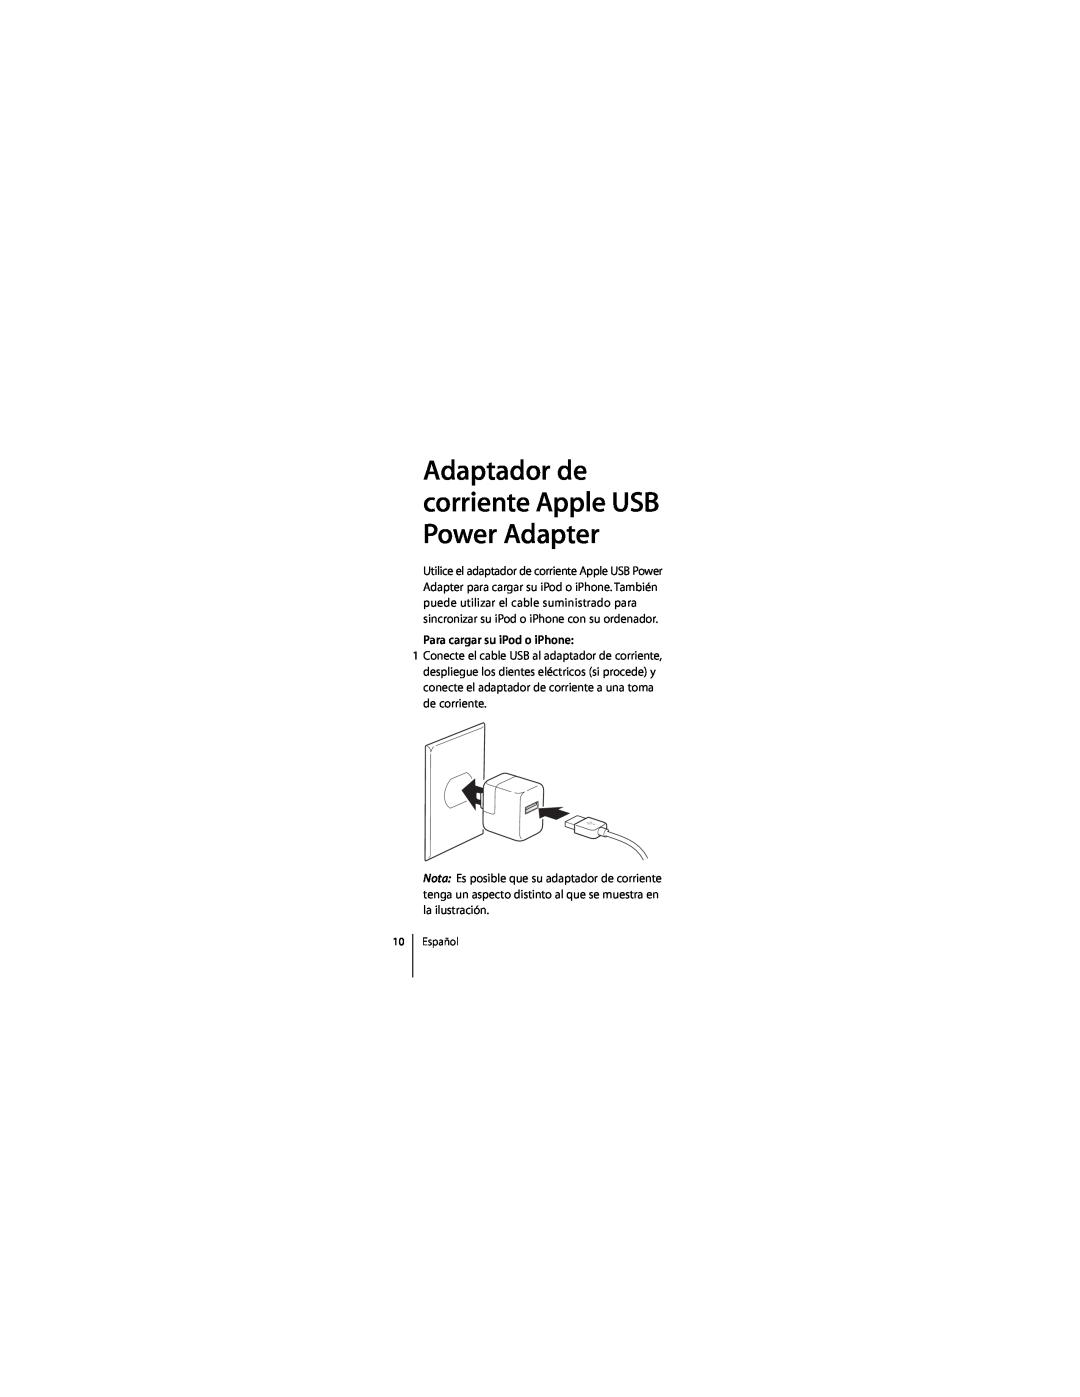 Apple ZM034-4835-A manual Para cargar su iPod o iPhone, Adaptador de corriente Apple USB Power Adapter 